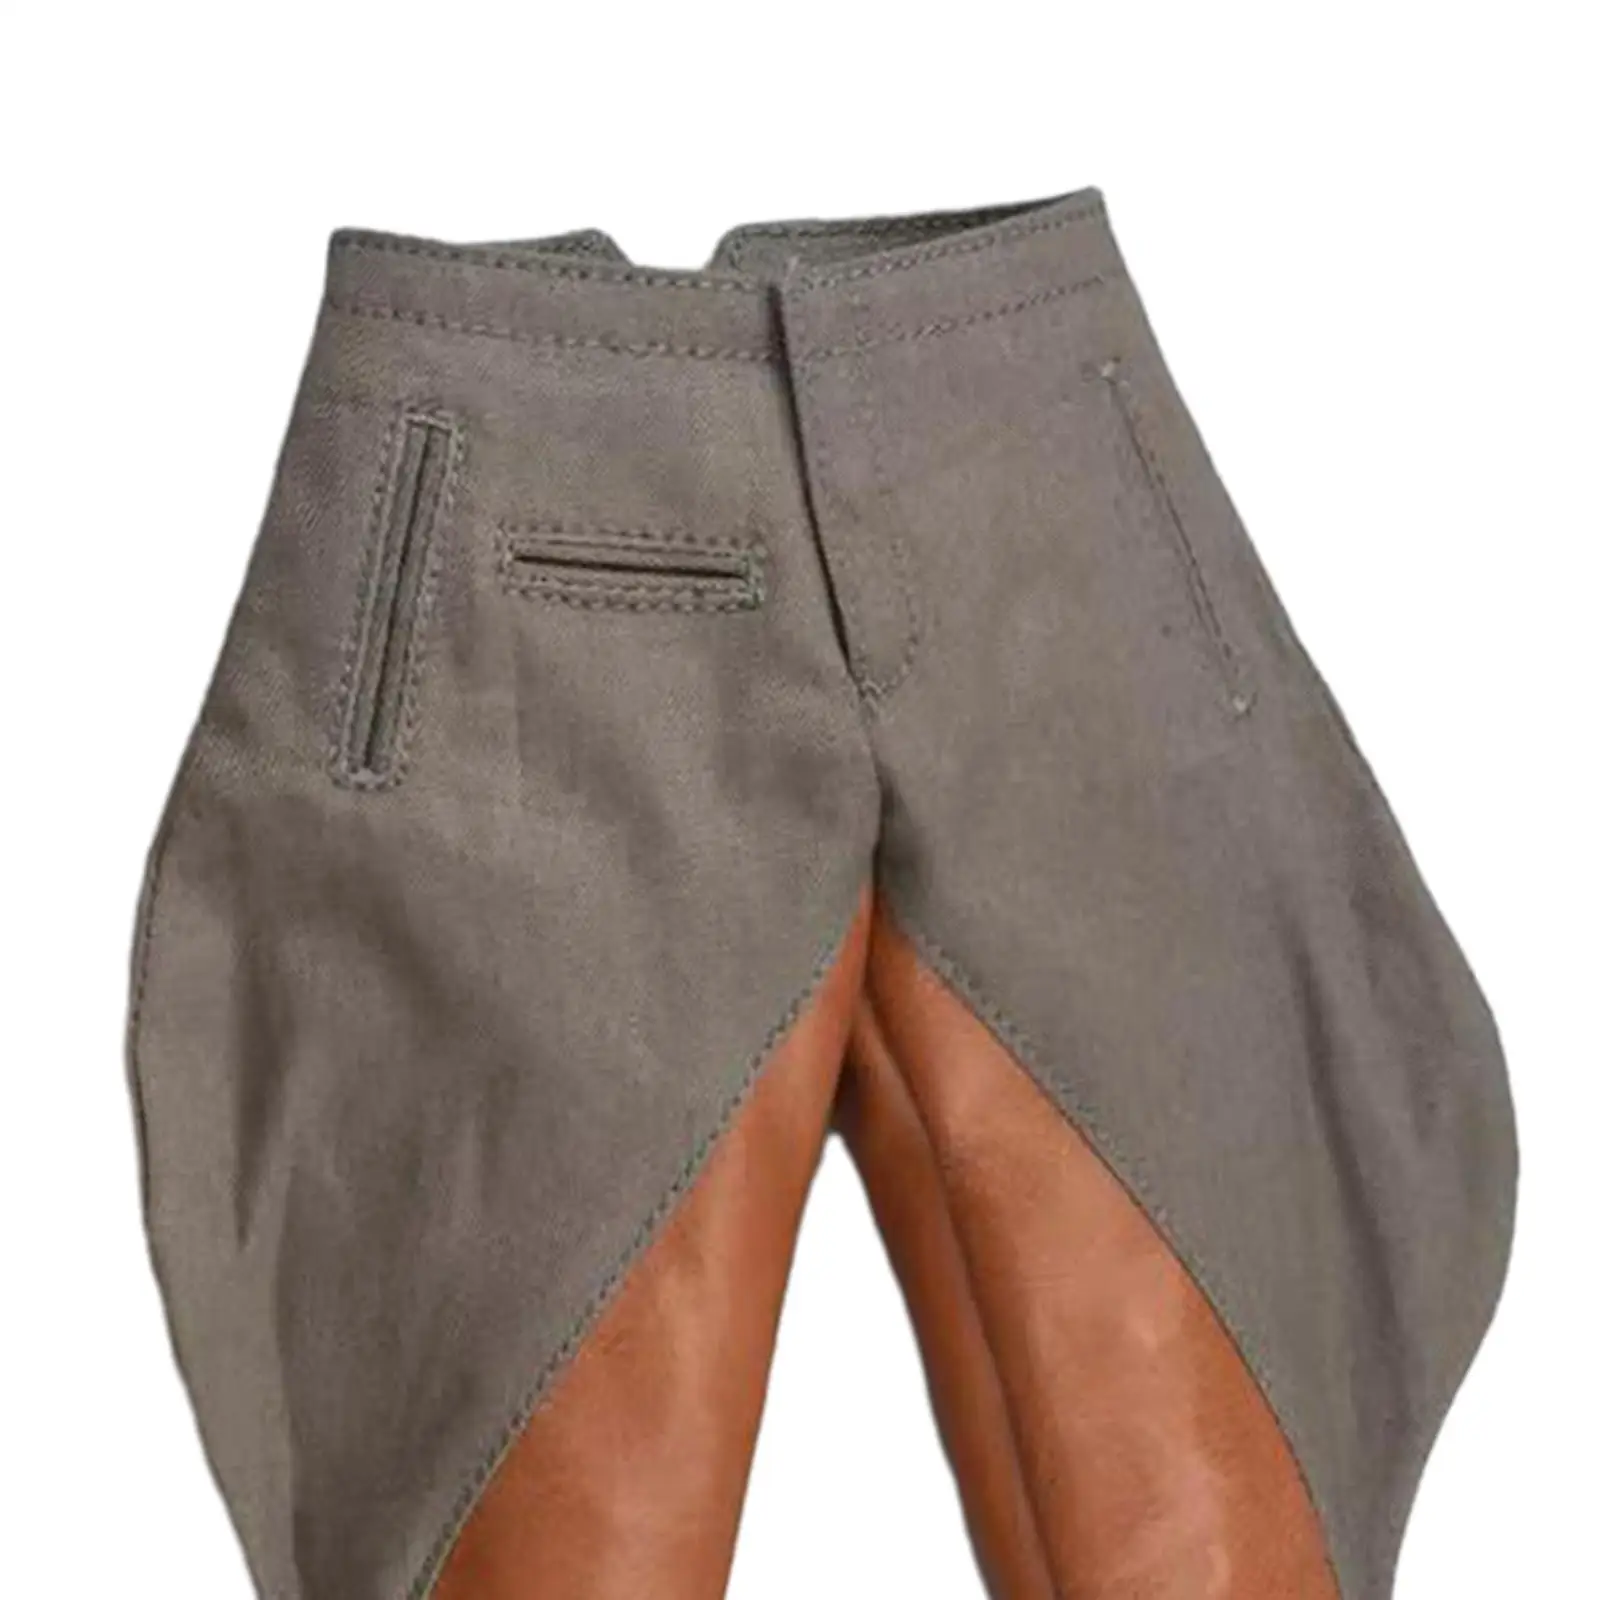 1/6 Male Soldier Pants, 1/6 Scale Pants Retro Dress up Male Figure Pants for 12`` inch Male Soldier Action Figures,